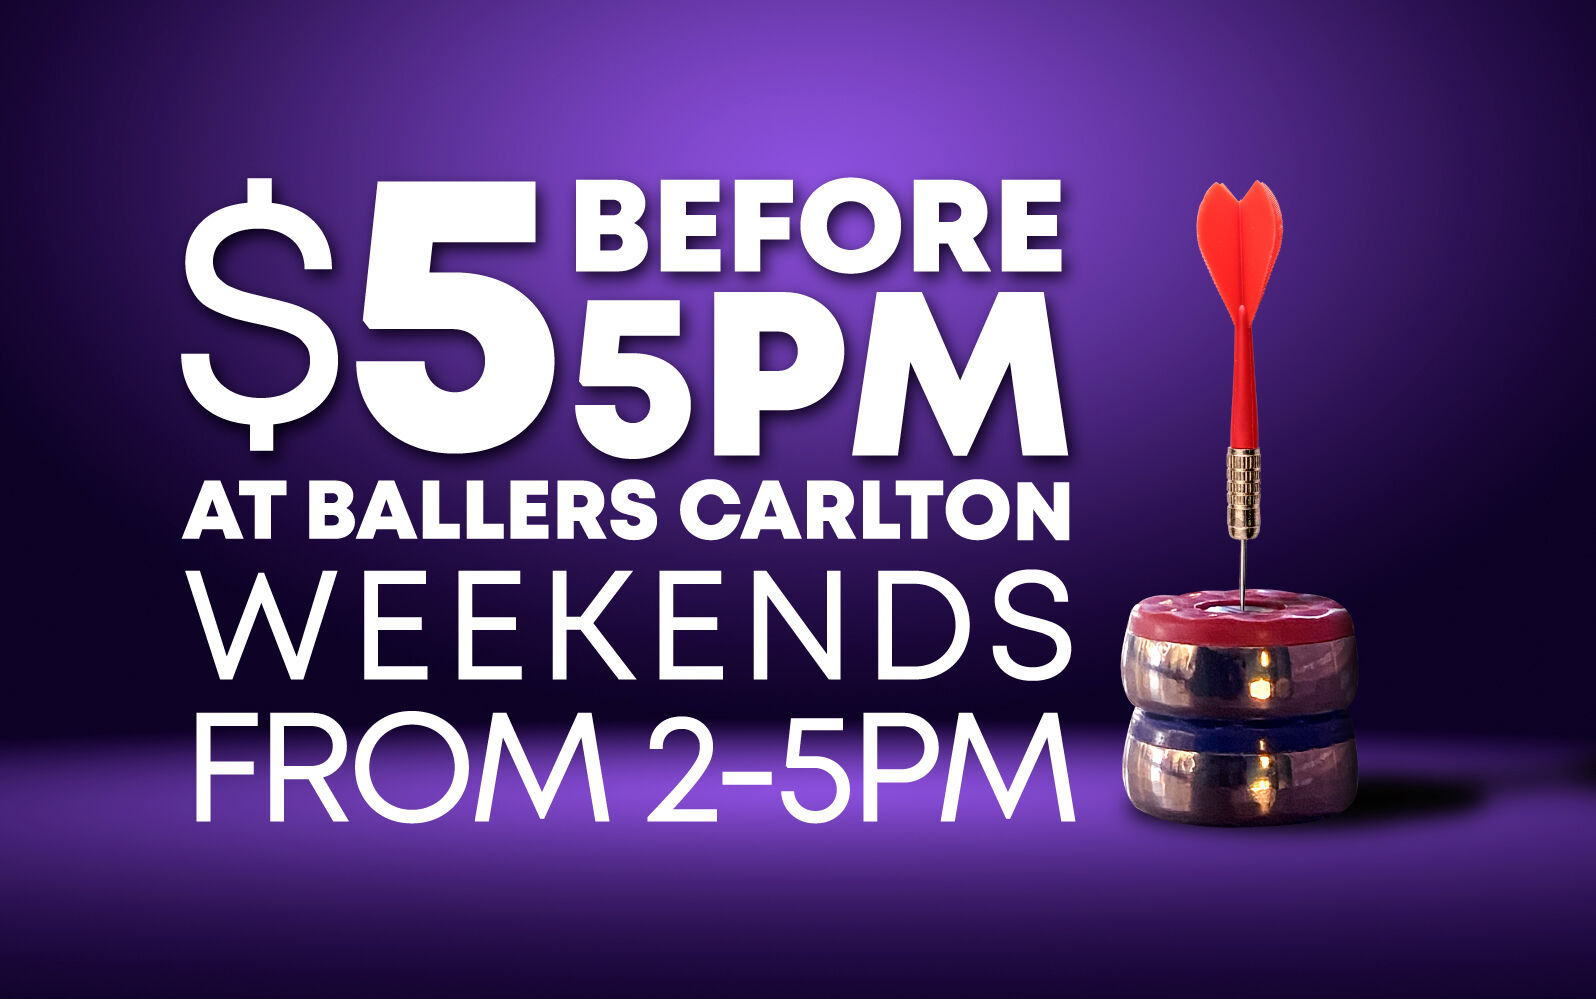 $5 BEFORE 5 | $5 GAMES 12-5PM THURSDAYS - SUNDAYS AT BALLERS CARLTON